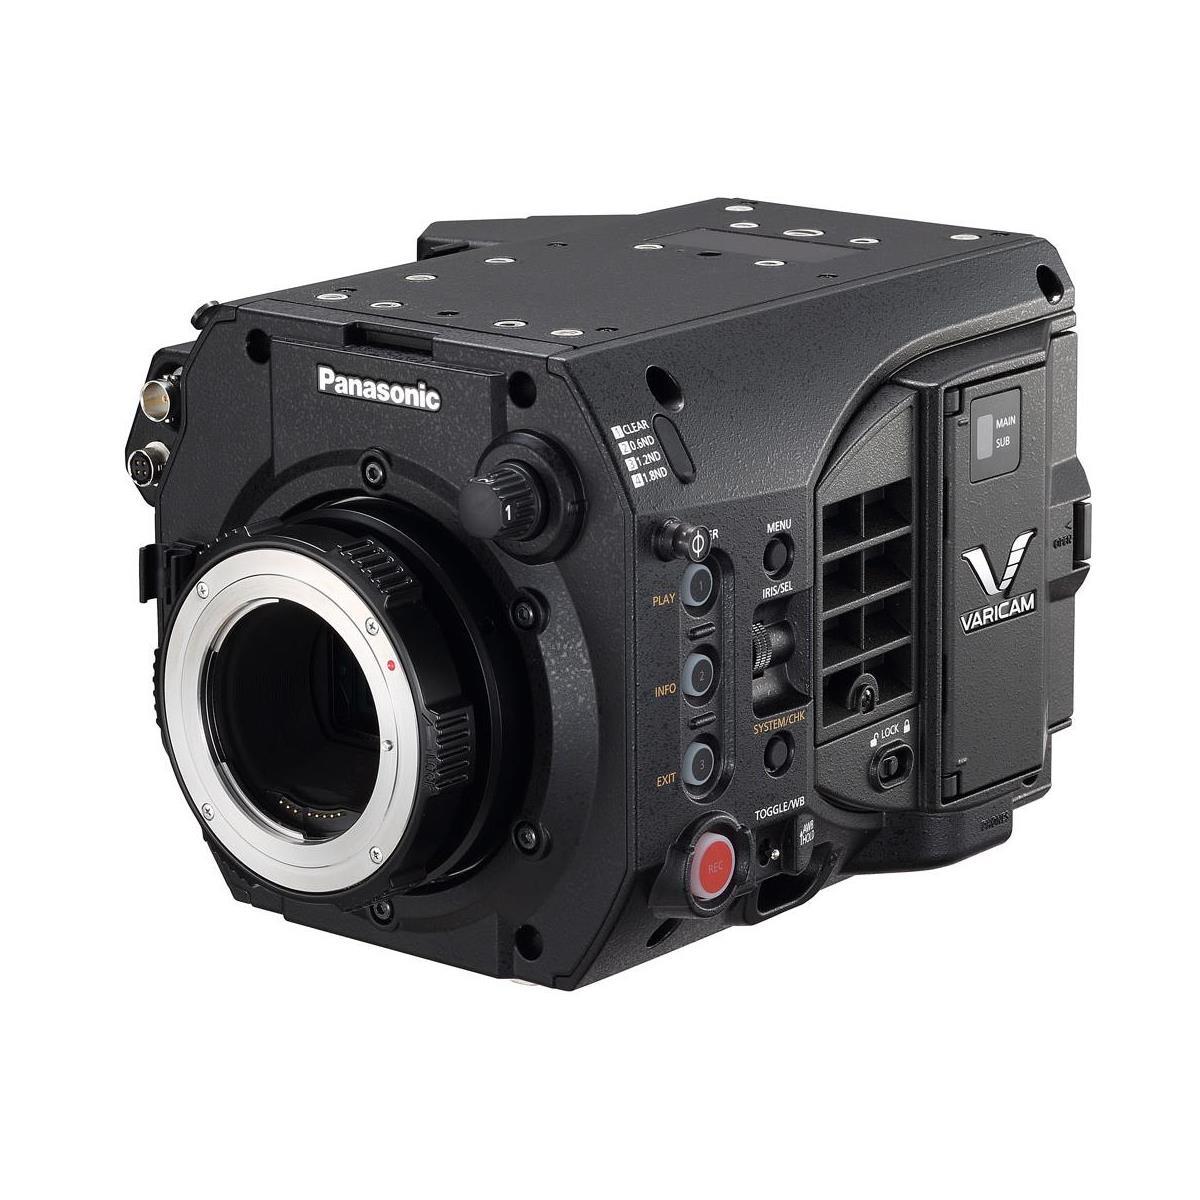 Image of Panasonic Compact 4K Super 35 VariCam LT Cinema Camera